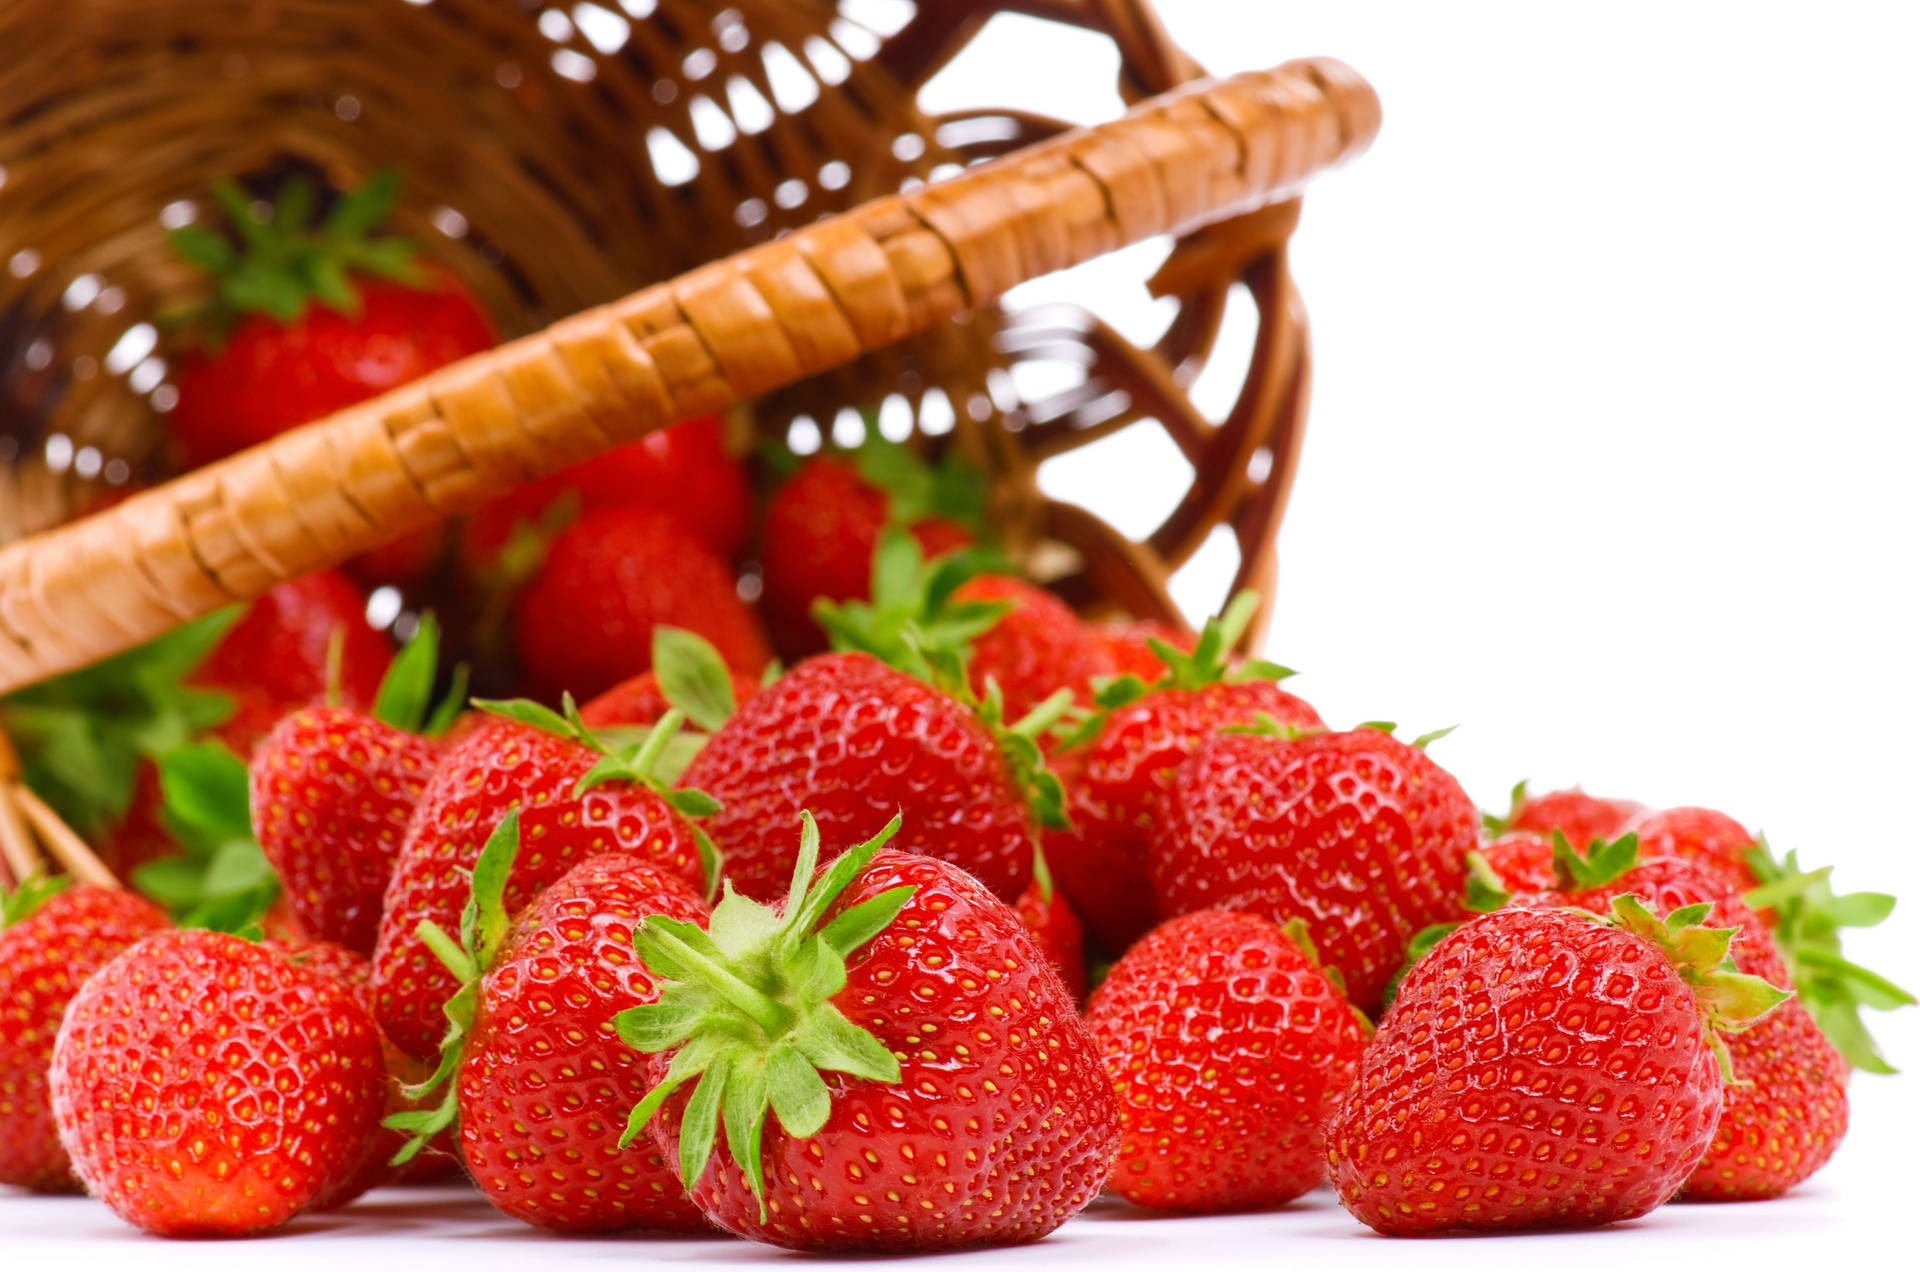 Fresh strawberries tumbling from a wicker basket Wallpaper